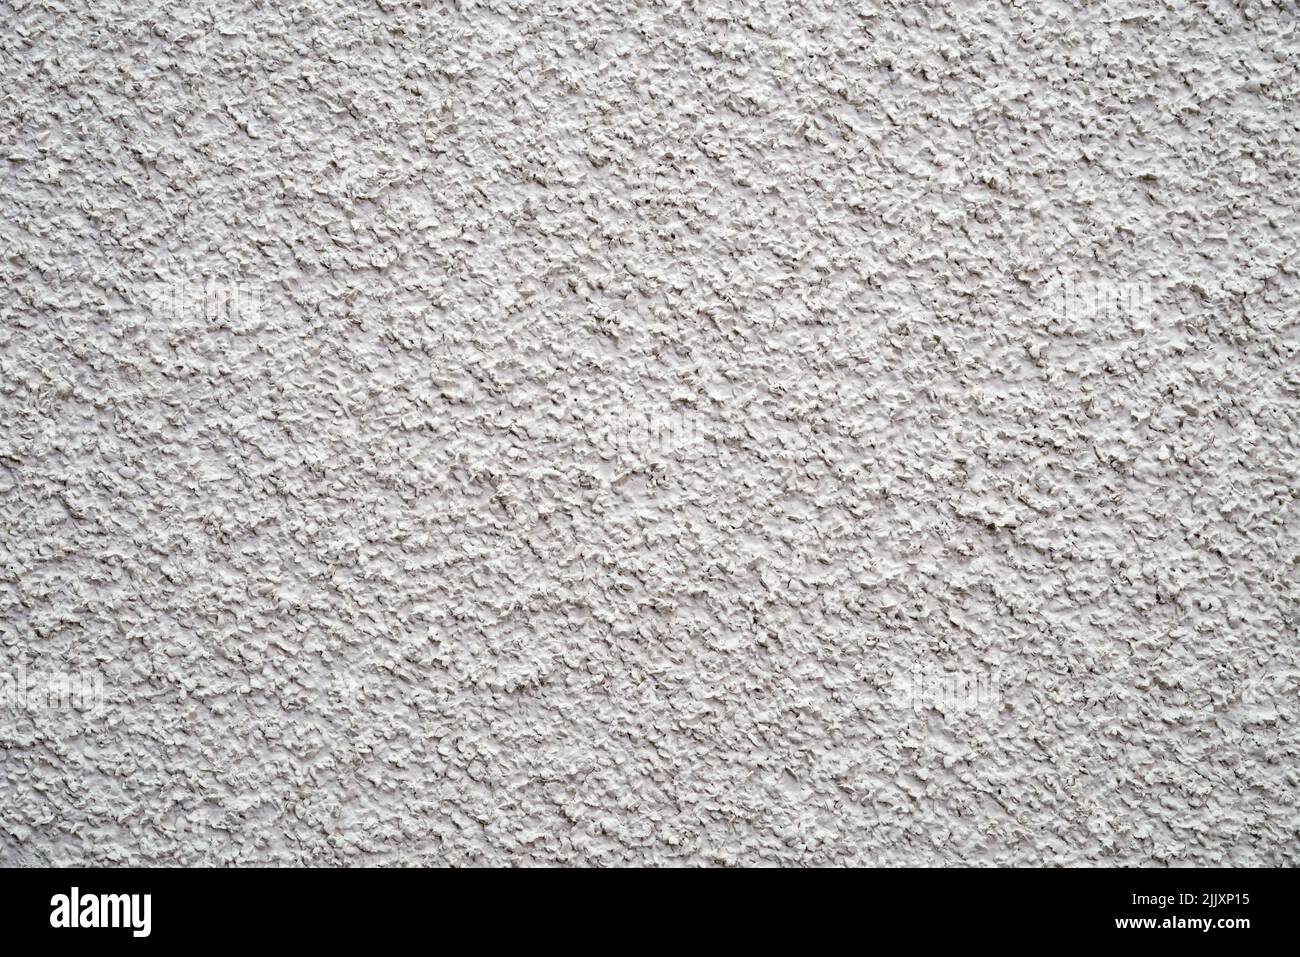 white popcorn ceiling texture background image Stock Photo